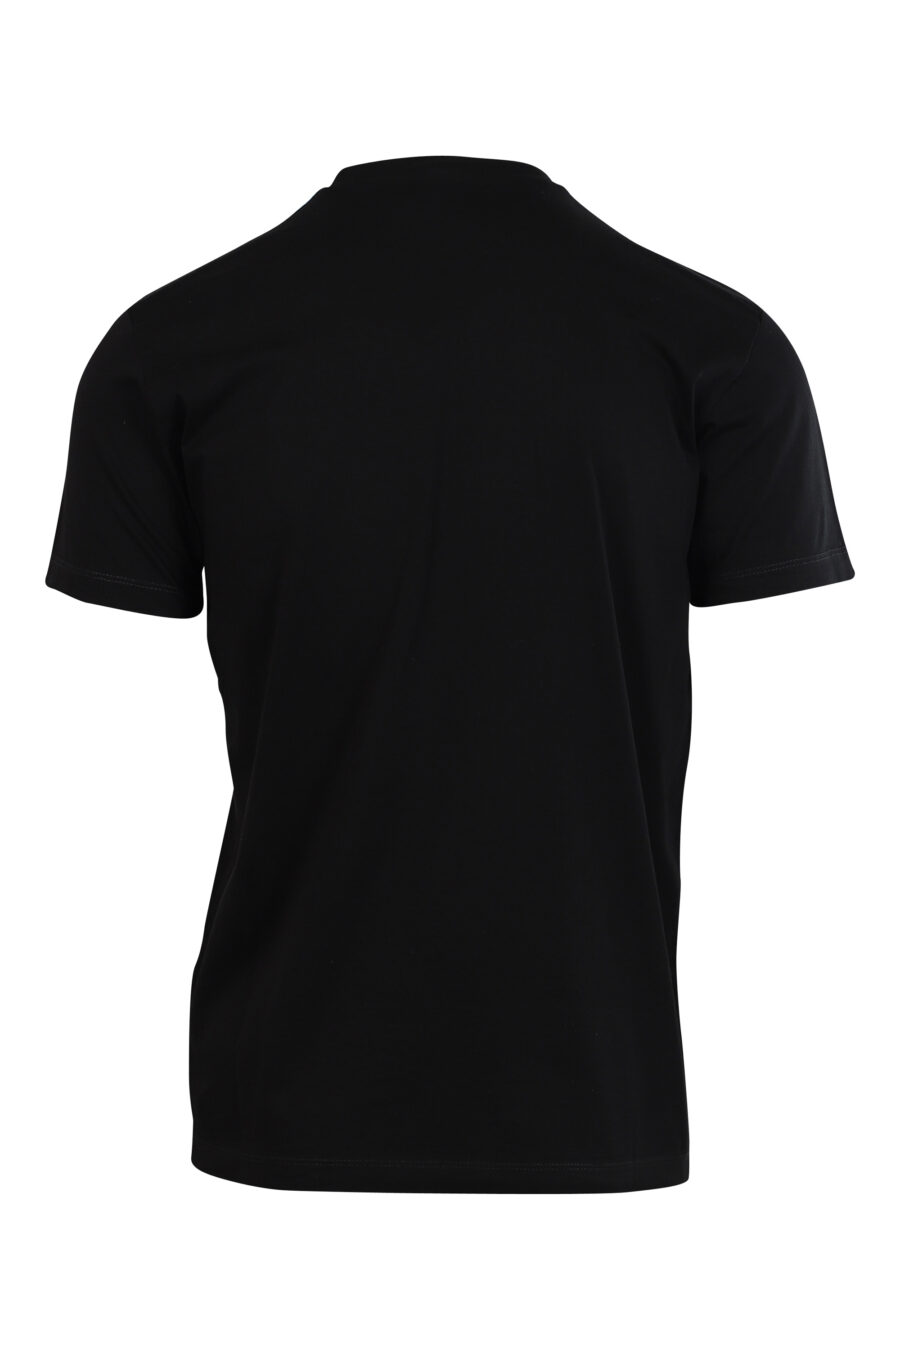 Camiseta negra con maxilogo "university" blanco - 8052134945810 2